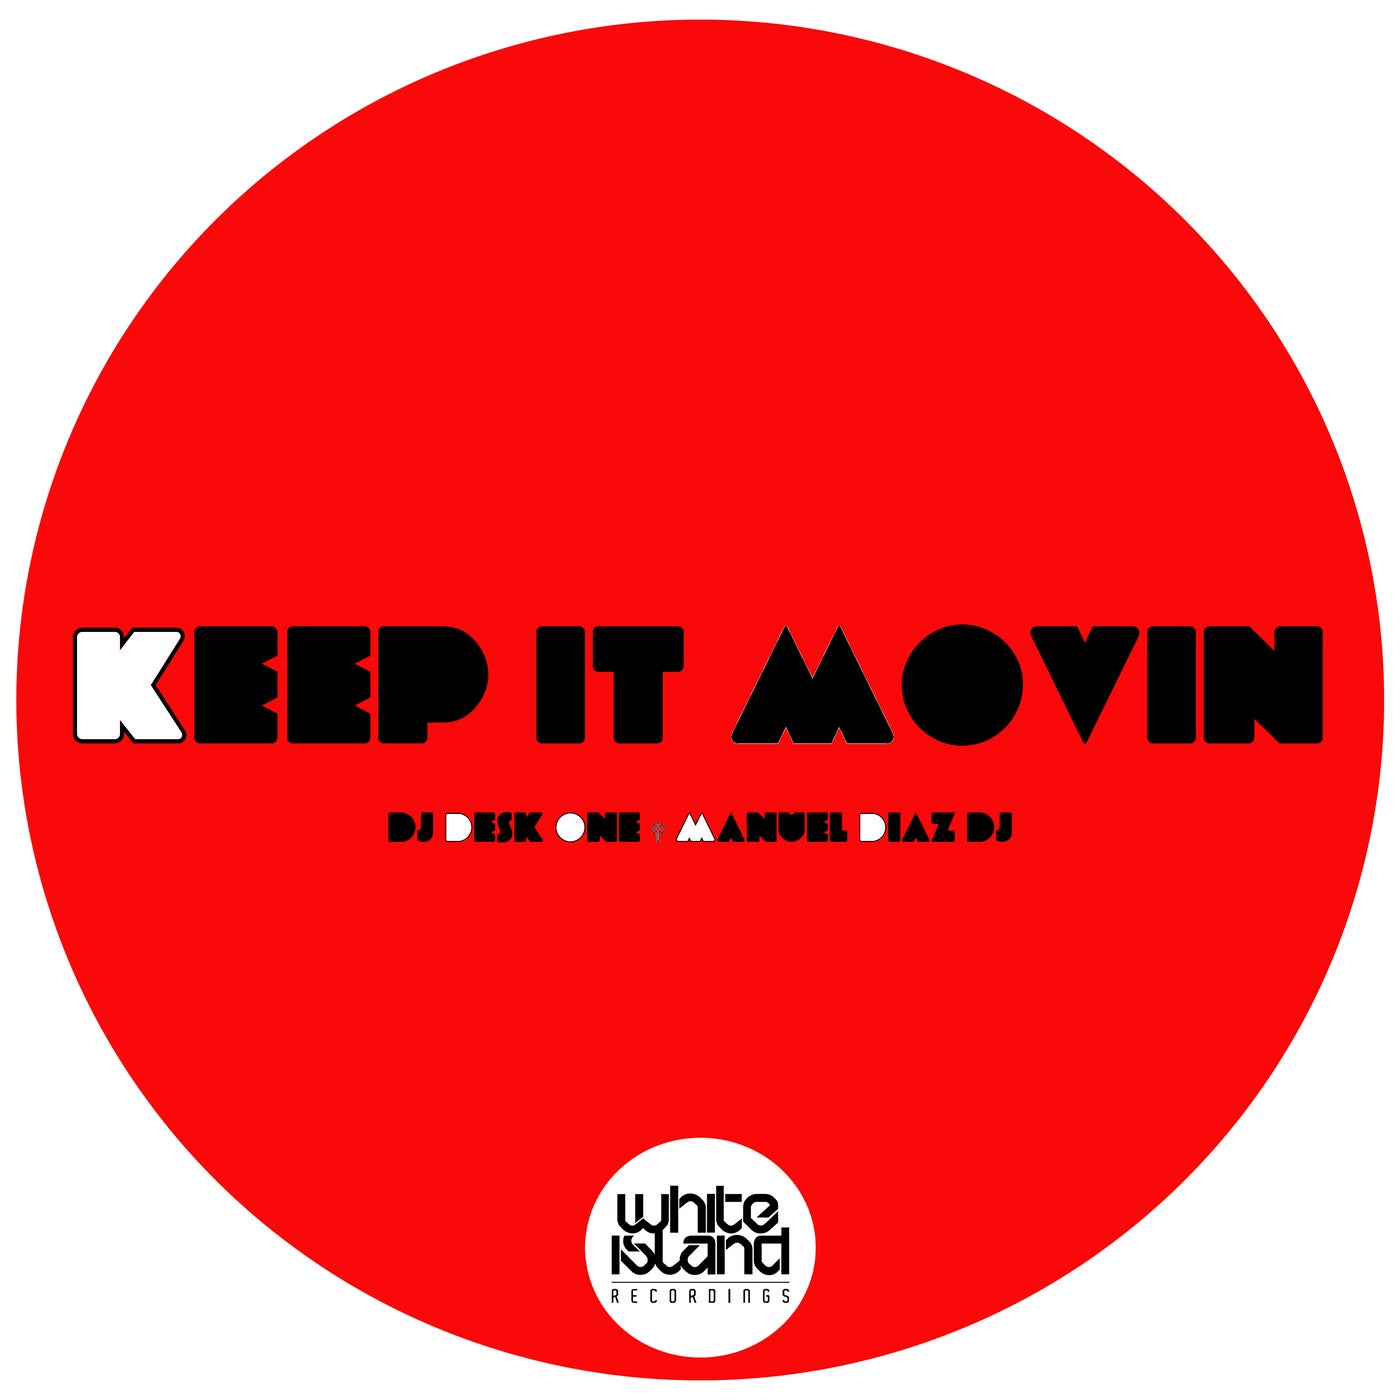 Keep it movin